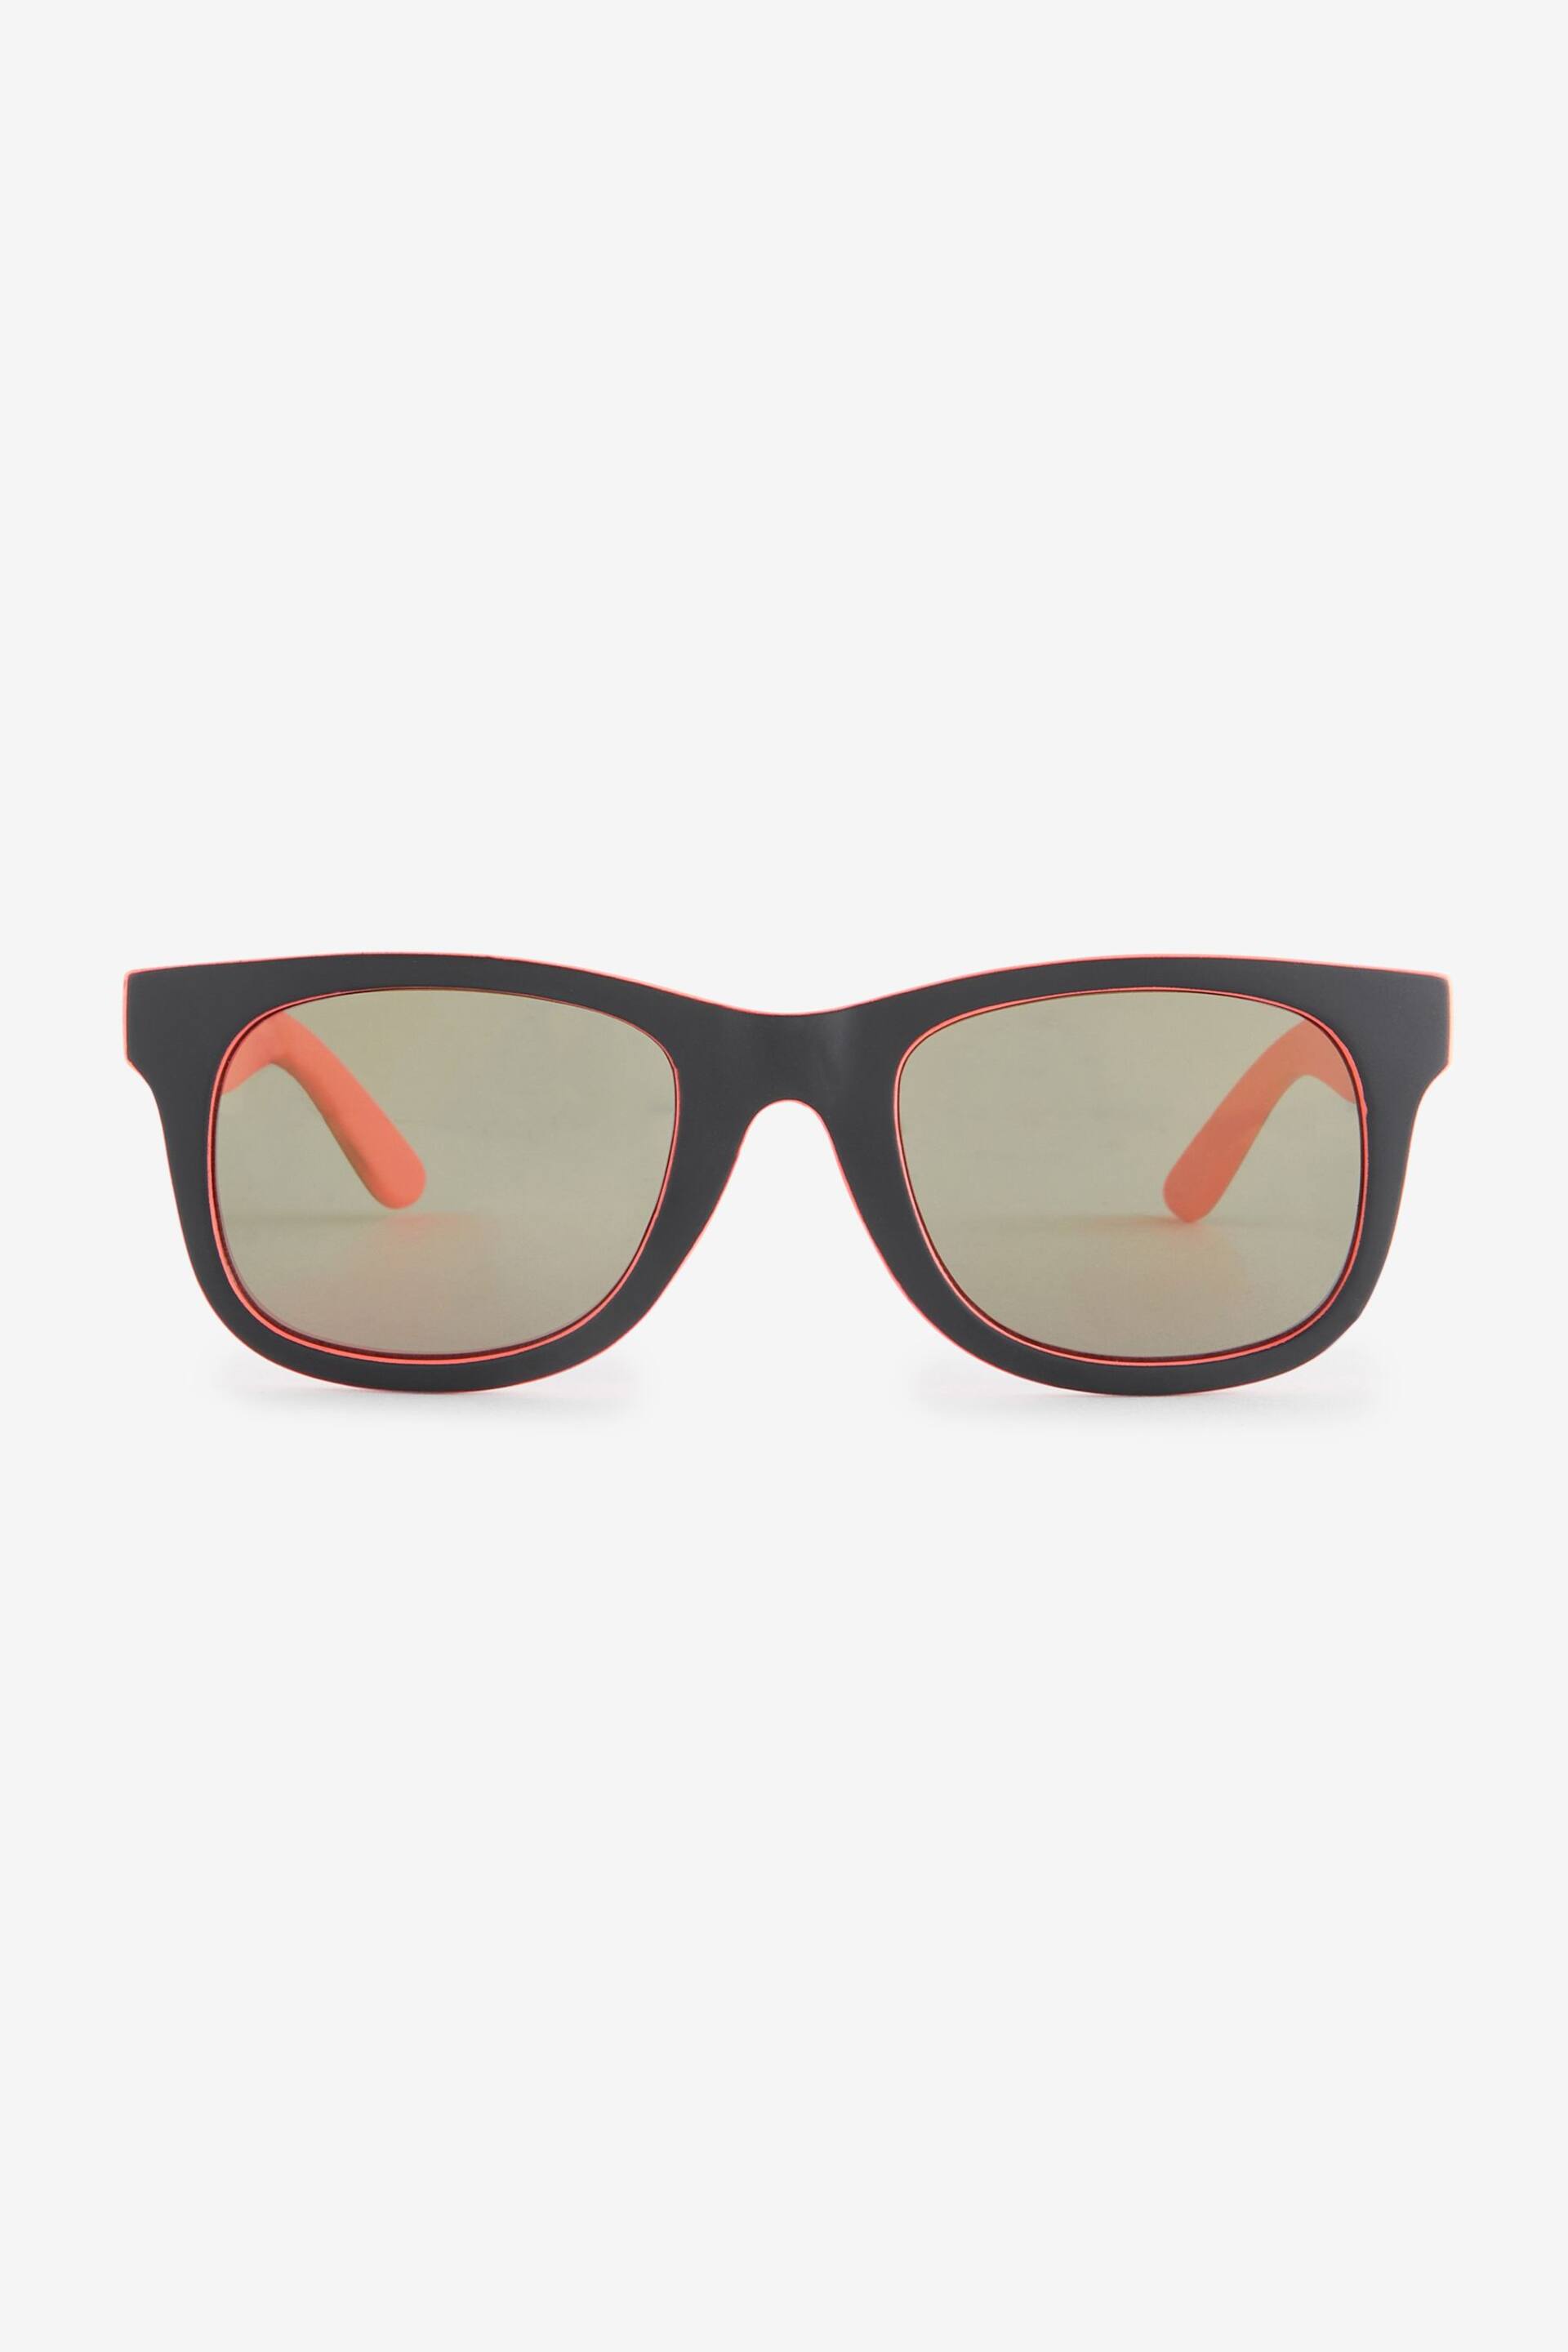 Black/Coral Preppy Sunglasses - Image 2 of 3